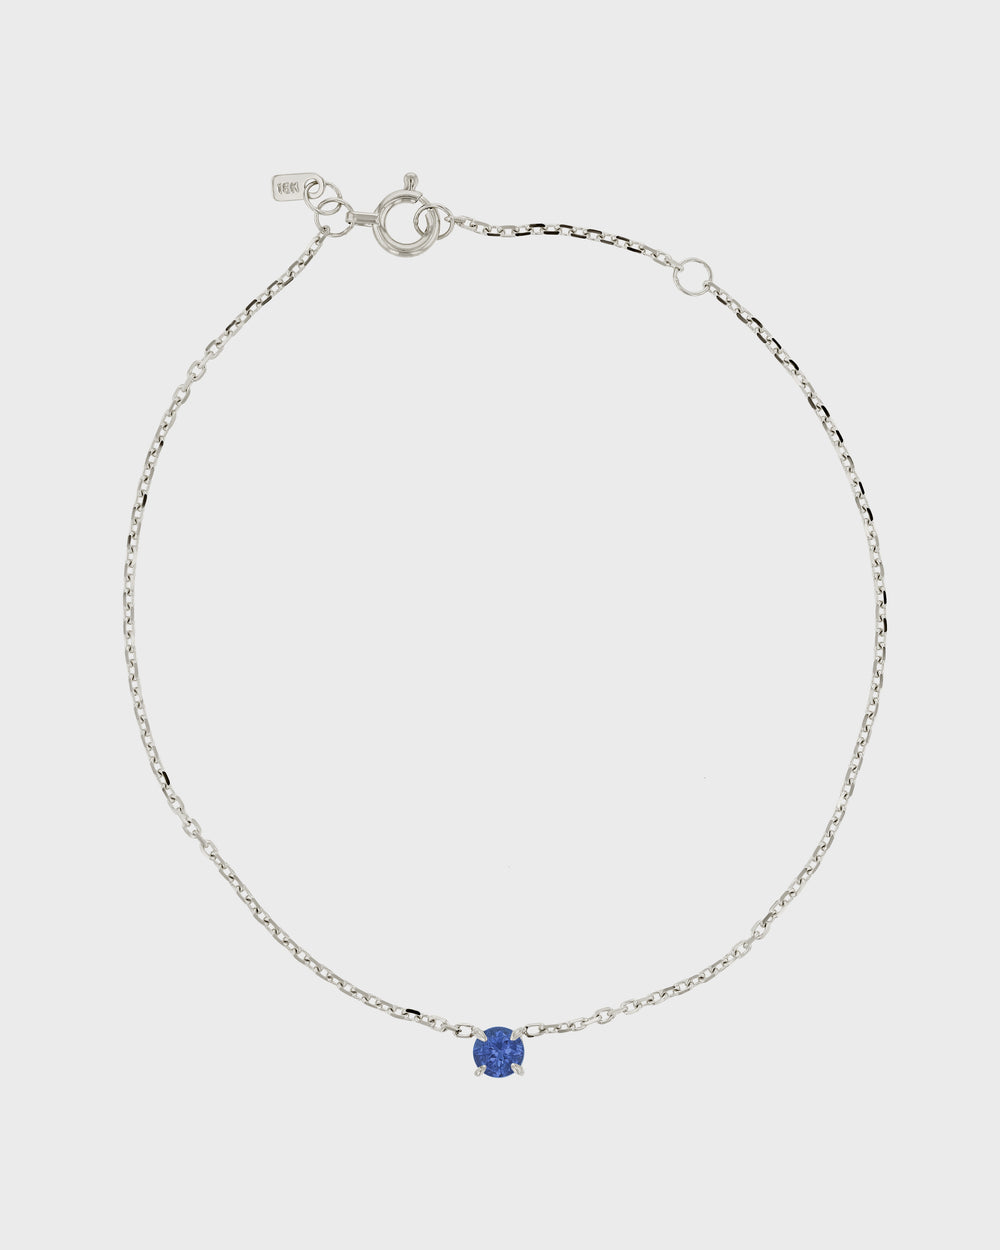 The Sapphire Birthstone Bracelet